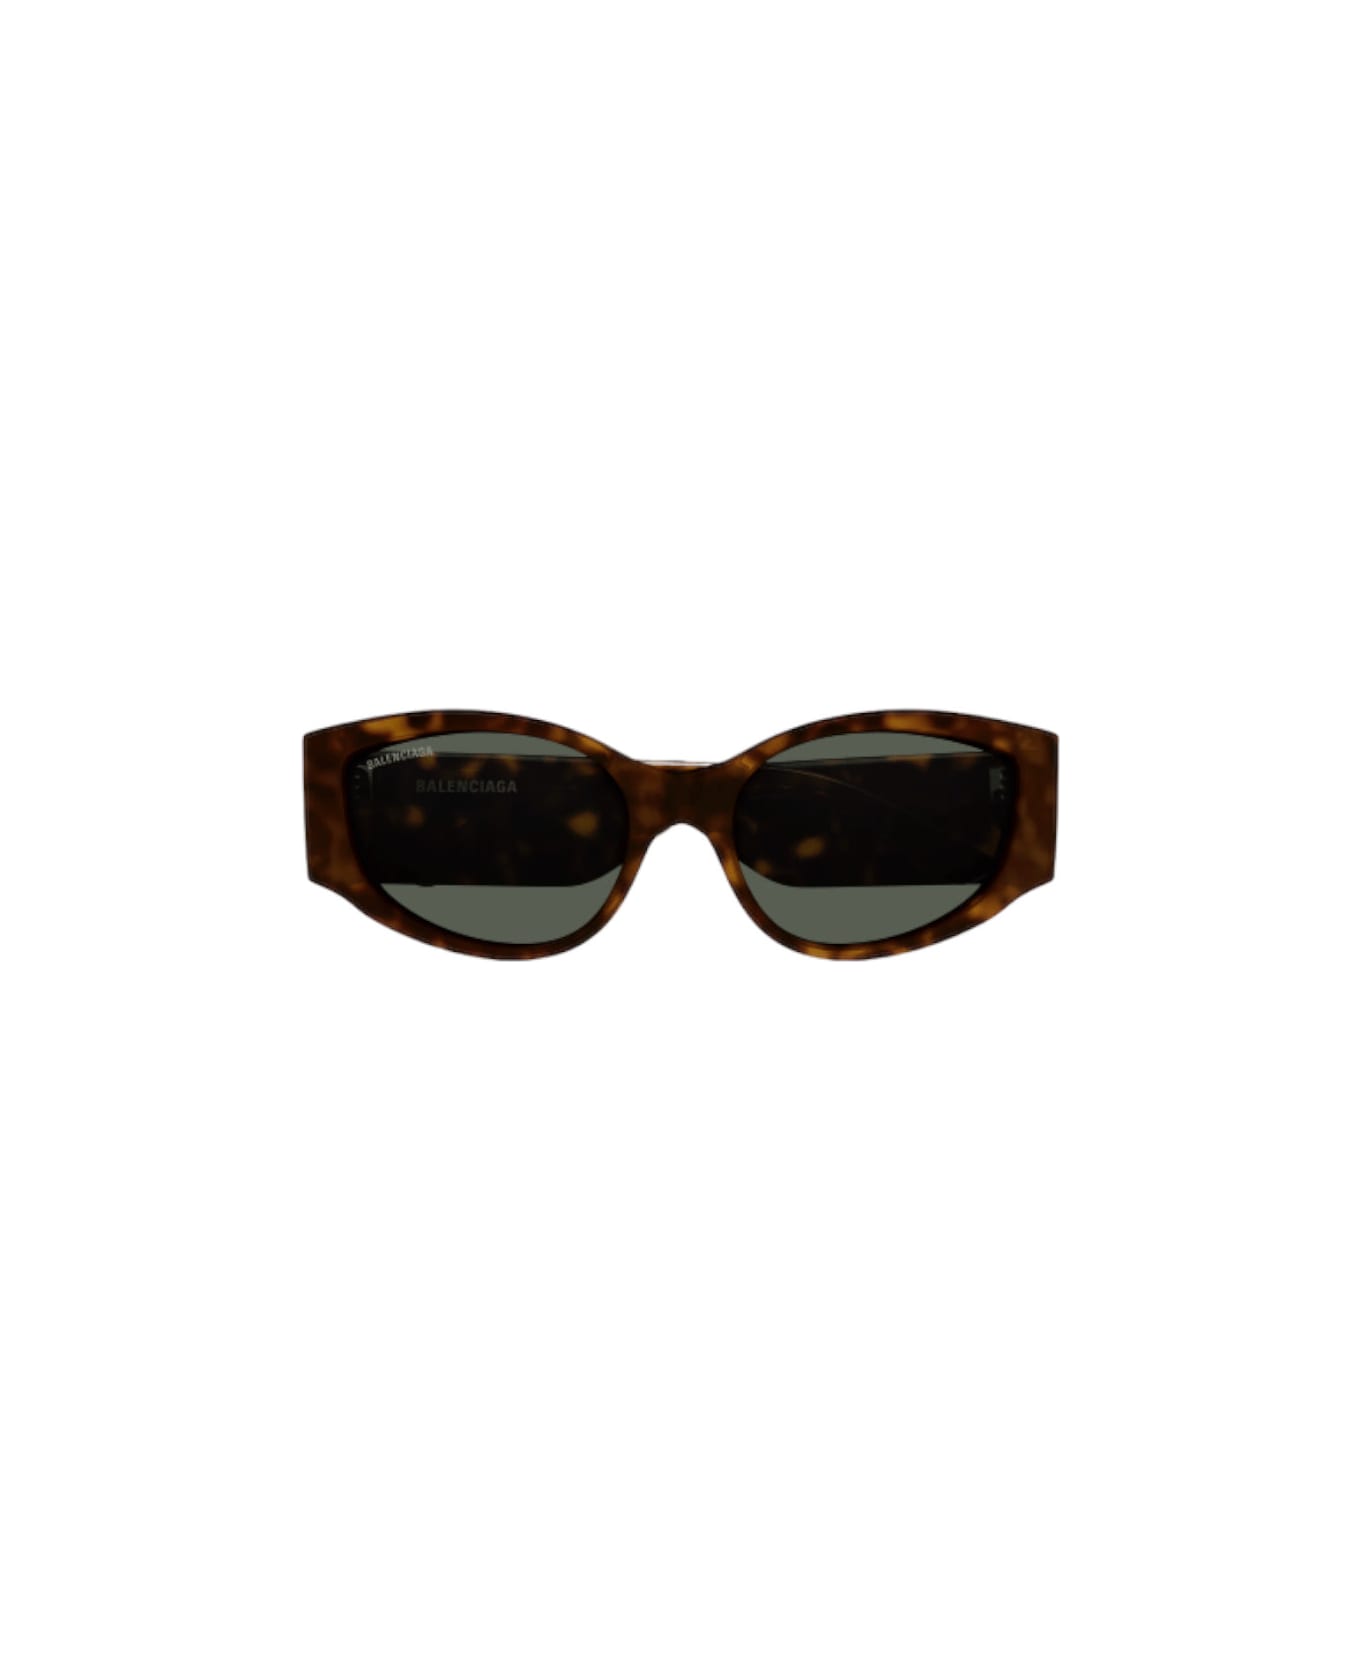 Balenciaga Eyewear Bb 0258 Sunglasses サングラス